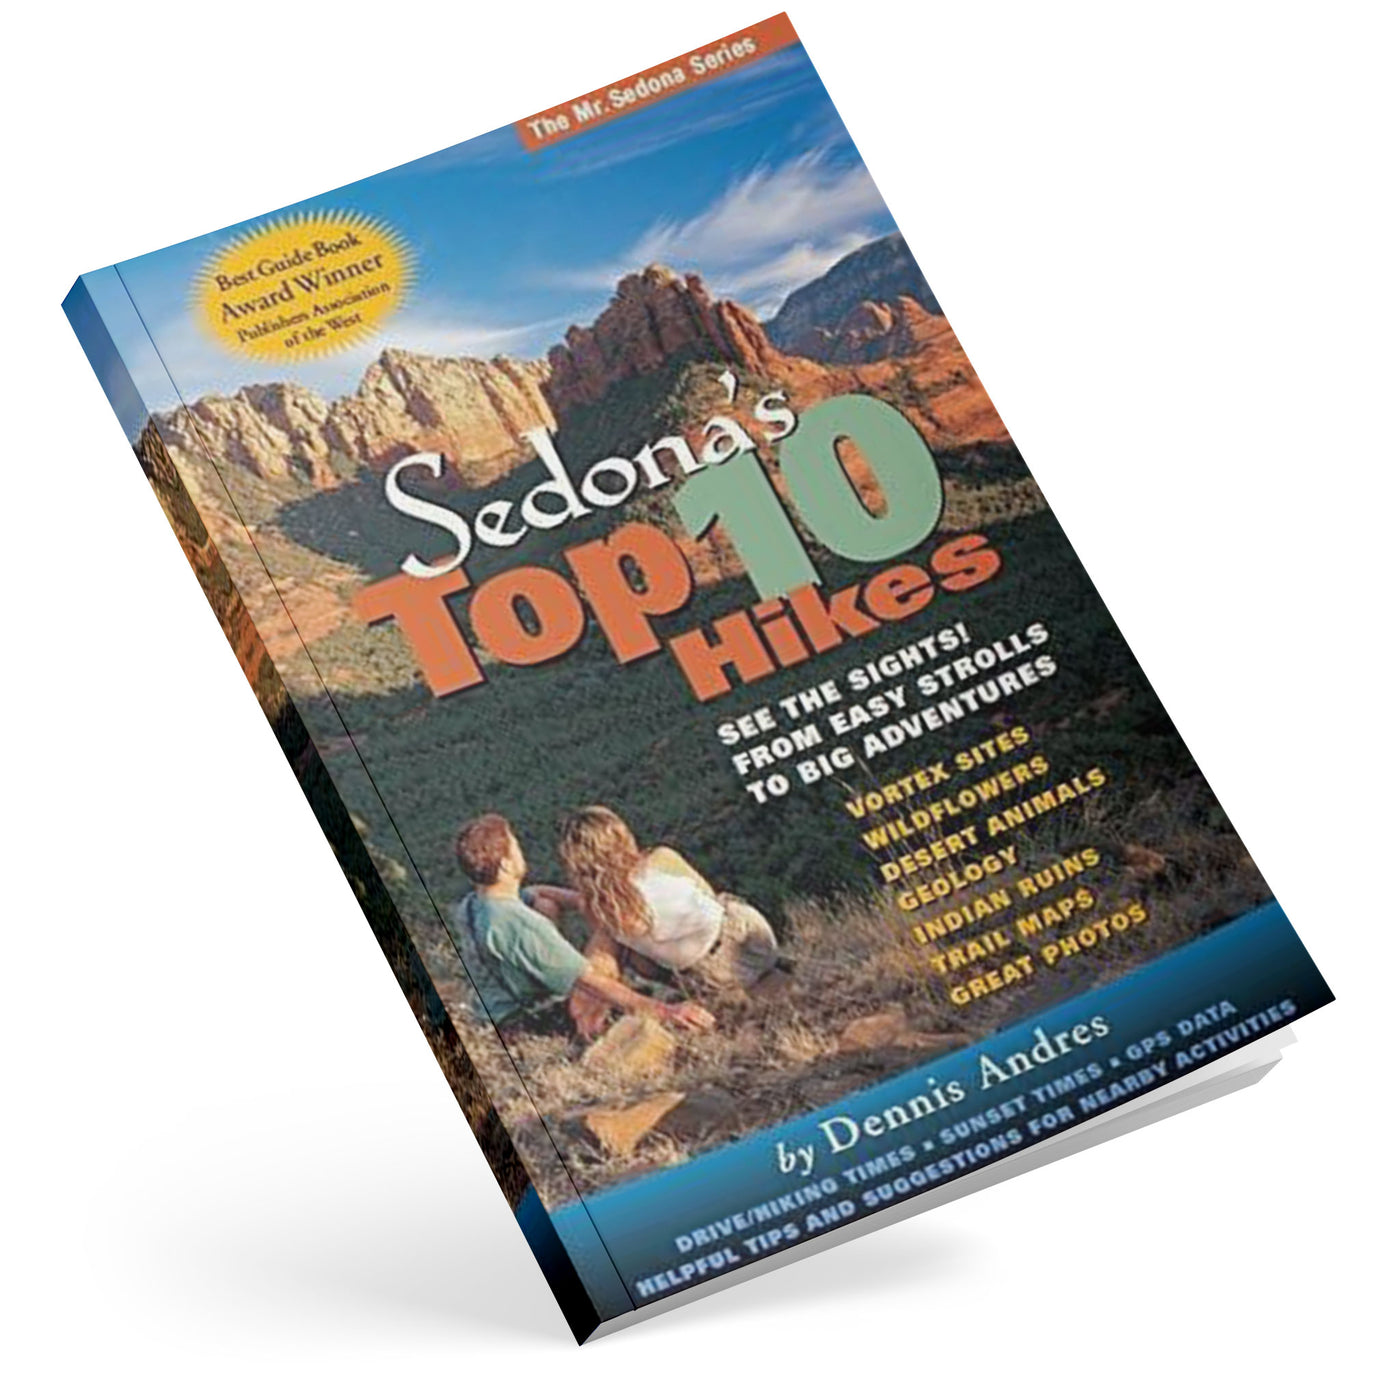 Sedona's Top 10 Hikes